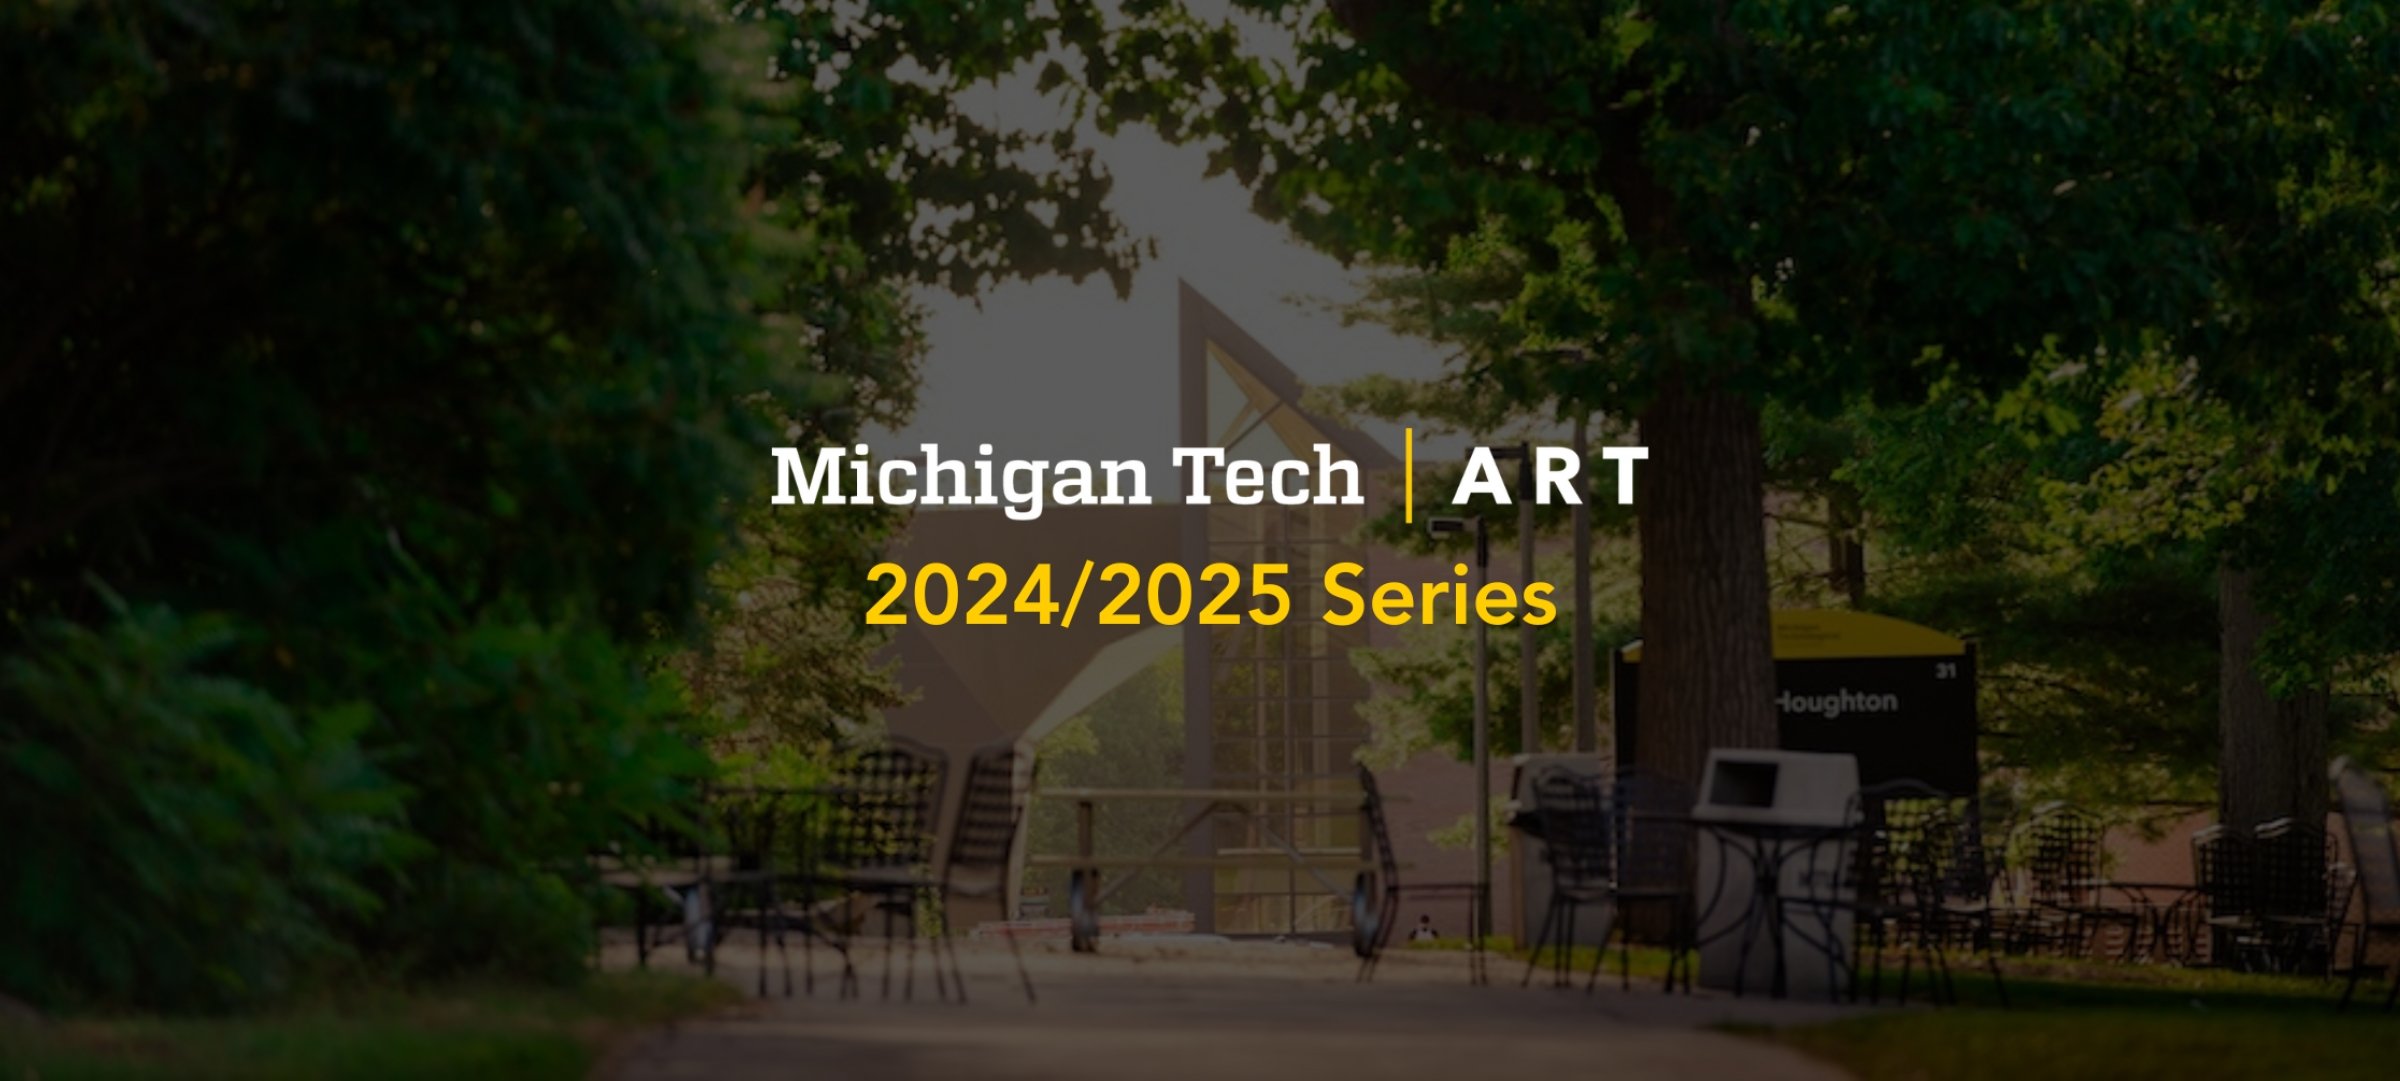 Michigan Tech Art 2024/2025 Series